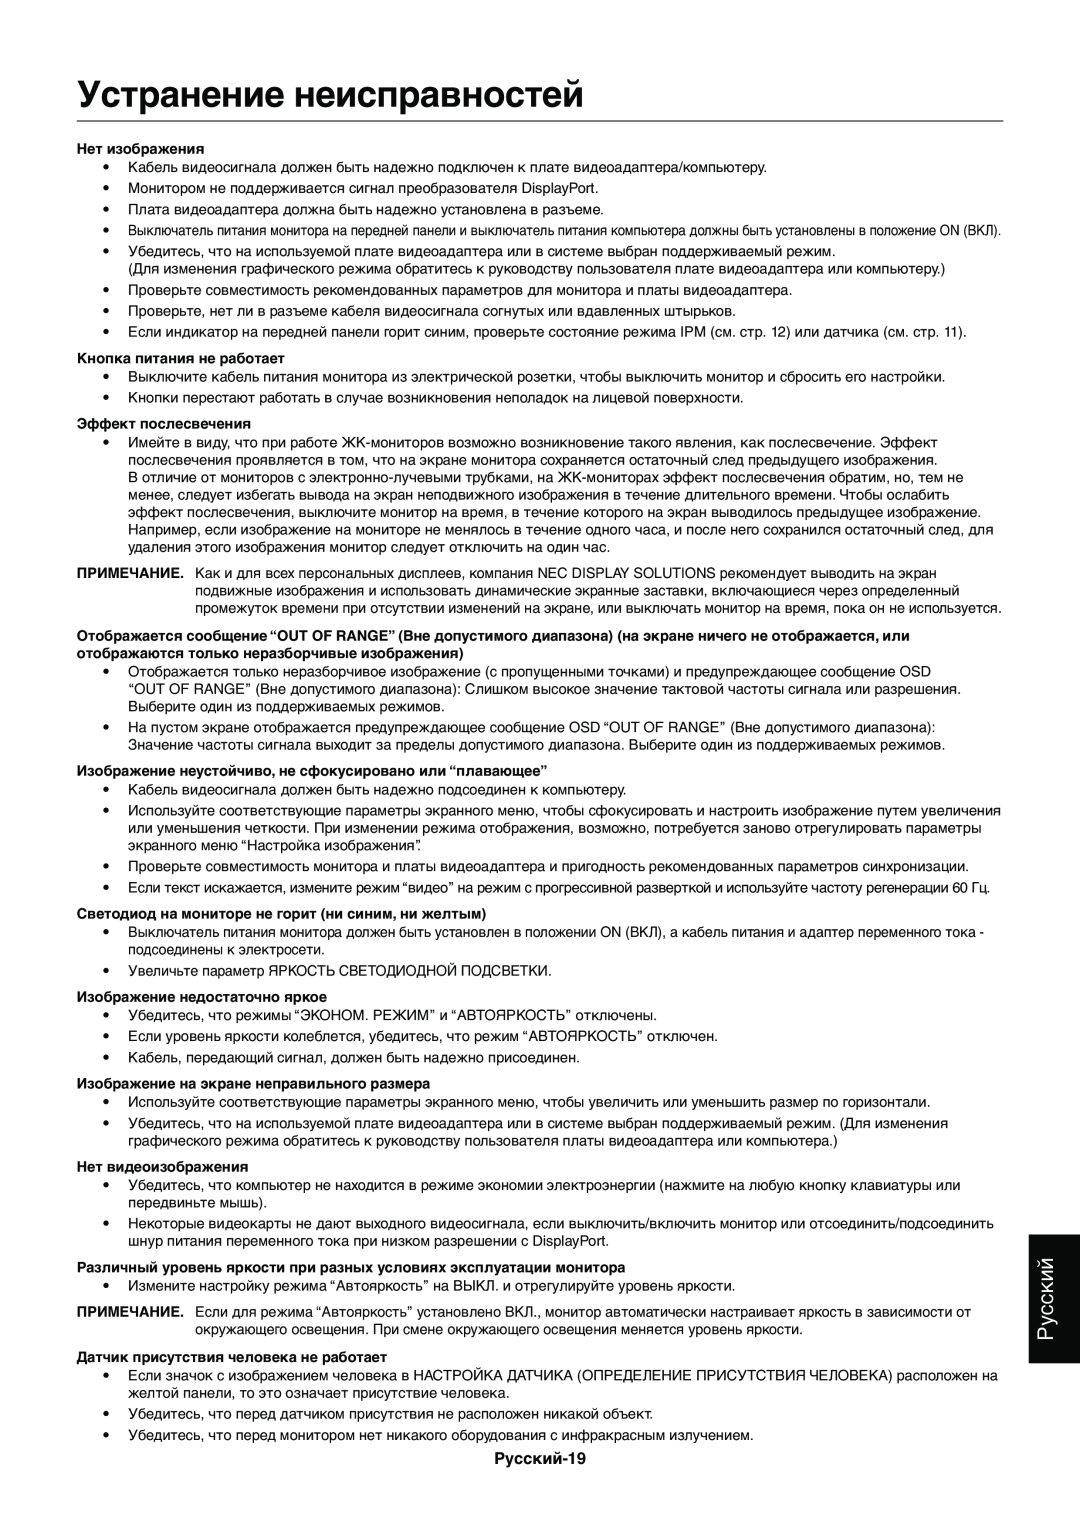 NEC EX231WP manual Устранение неисправностей, Русский-19 